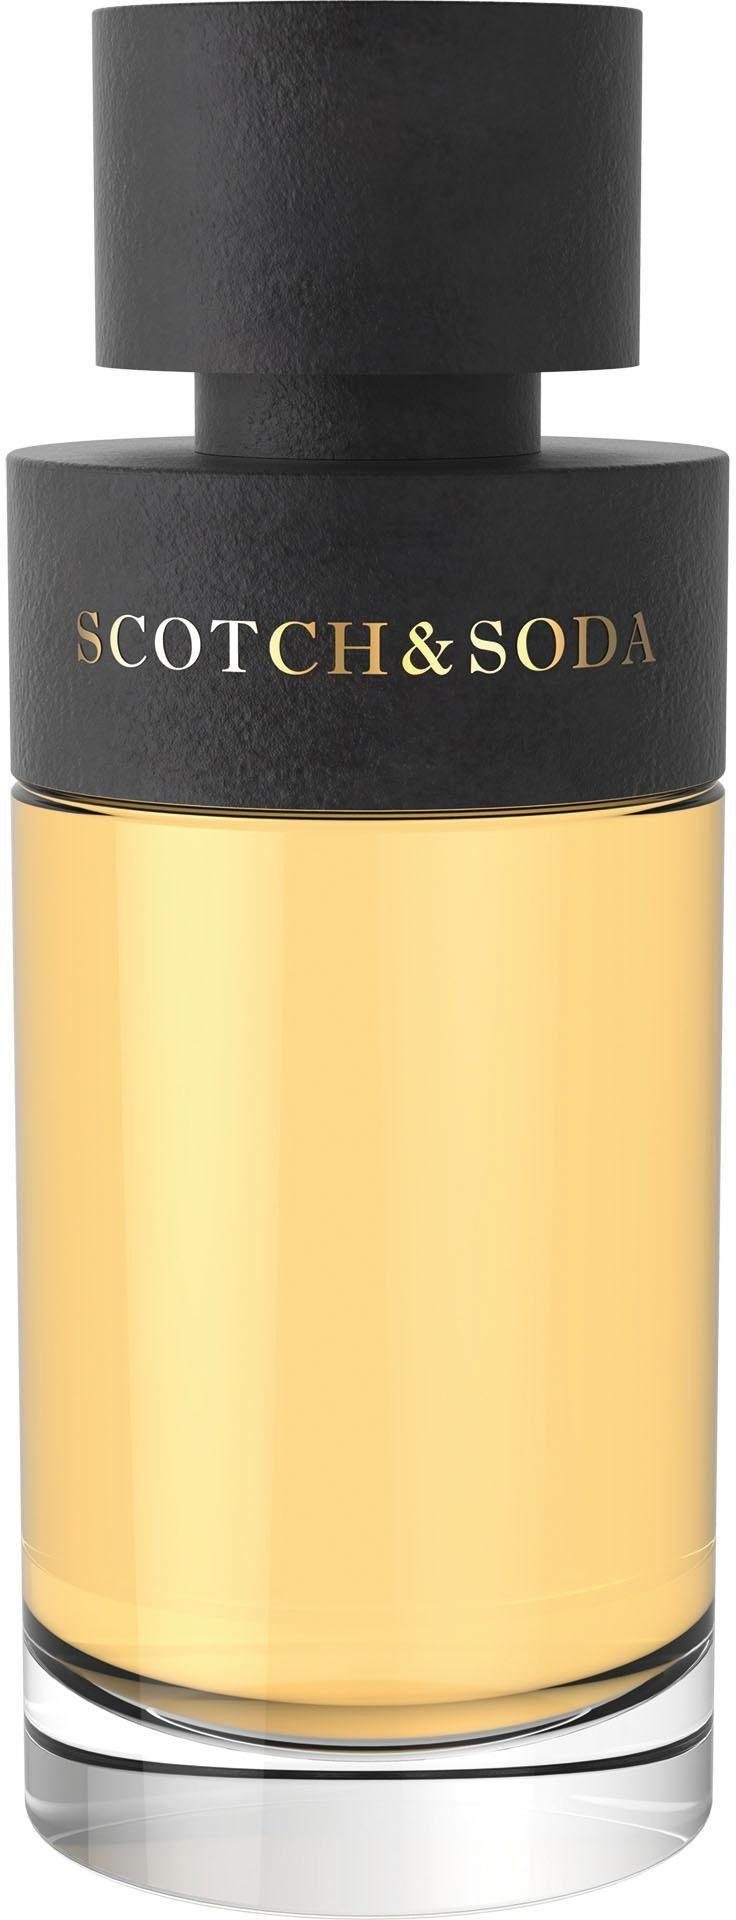 Men Scotch Soda Eau & de Toilette